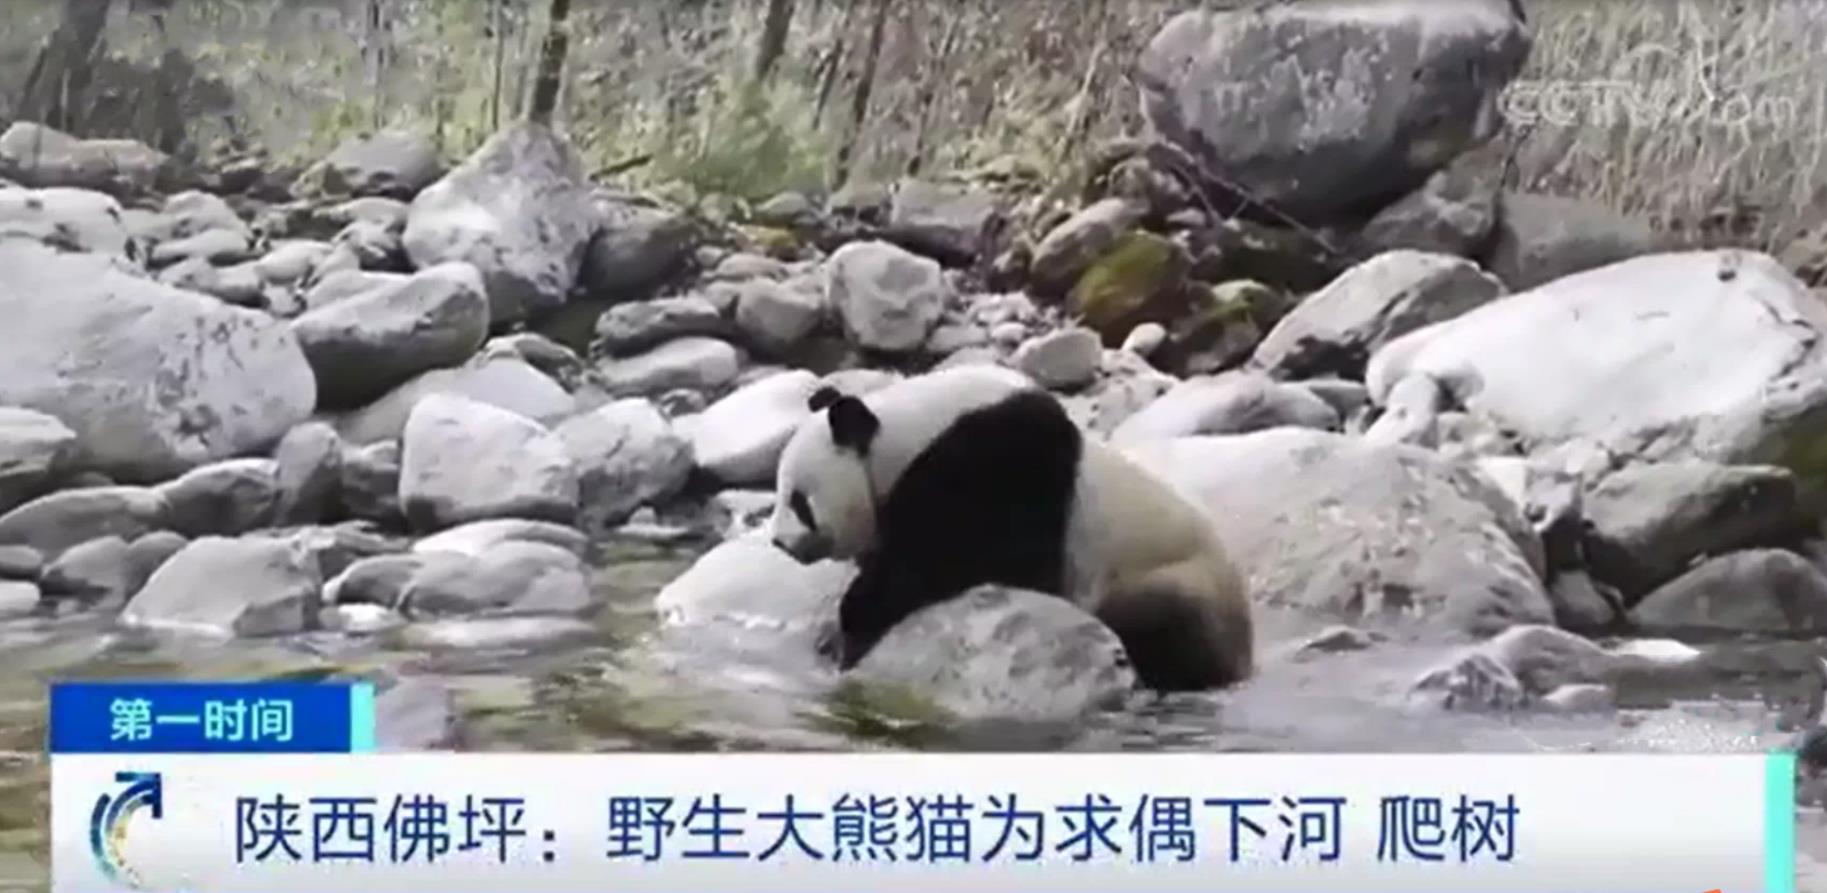 <b>汉中佛坪护林员 拍到大熊猫下树“求偶”画面</b>